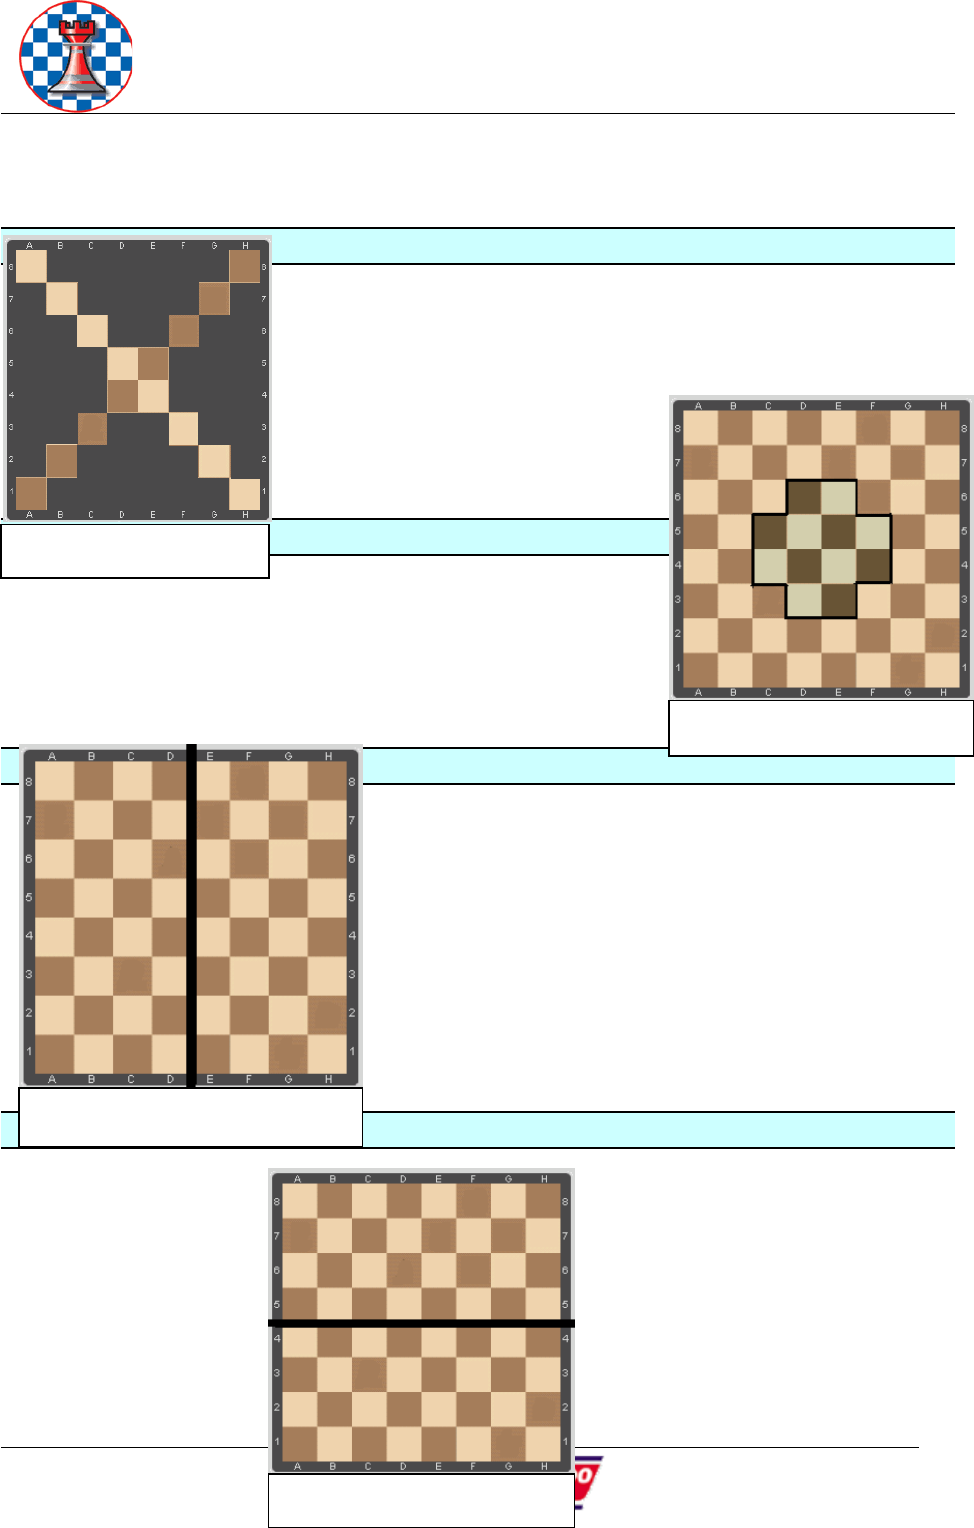 Apostila xadrez escolar pdf-1 - Engenharia